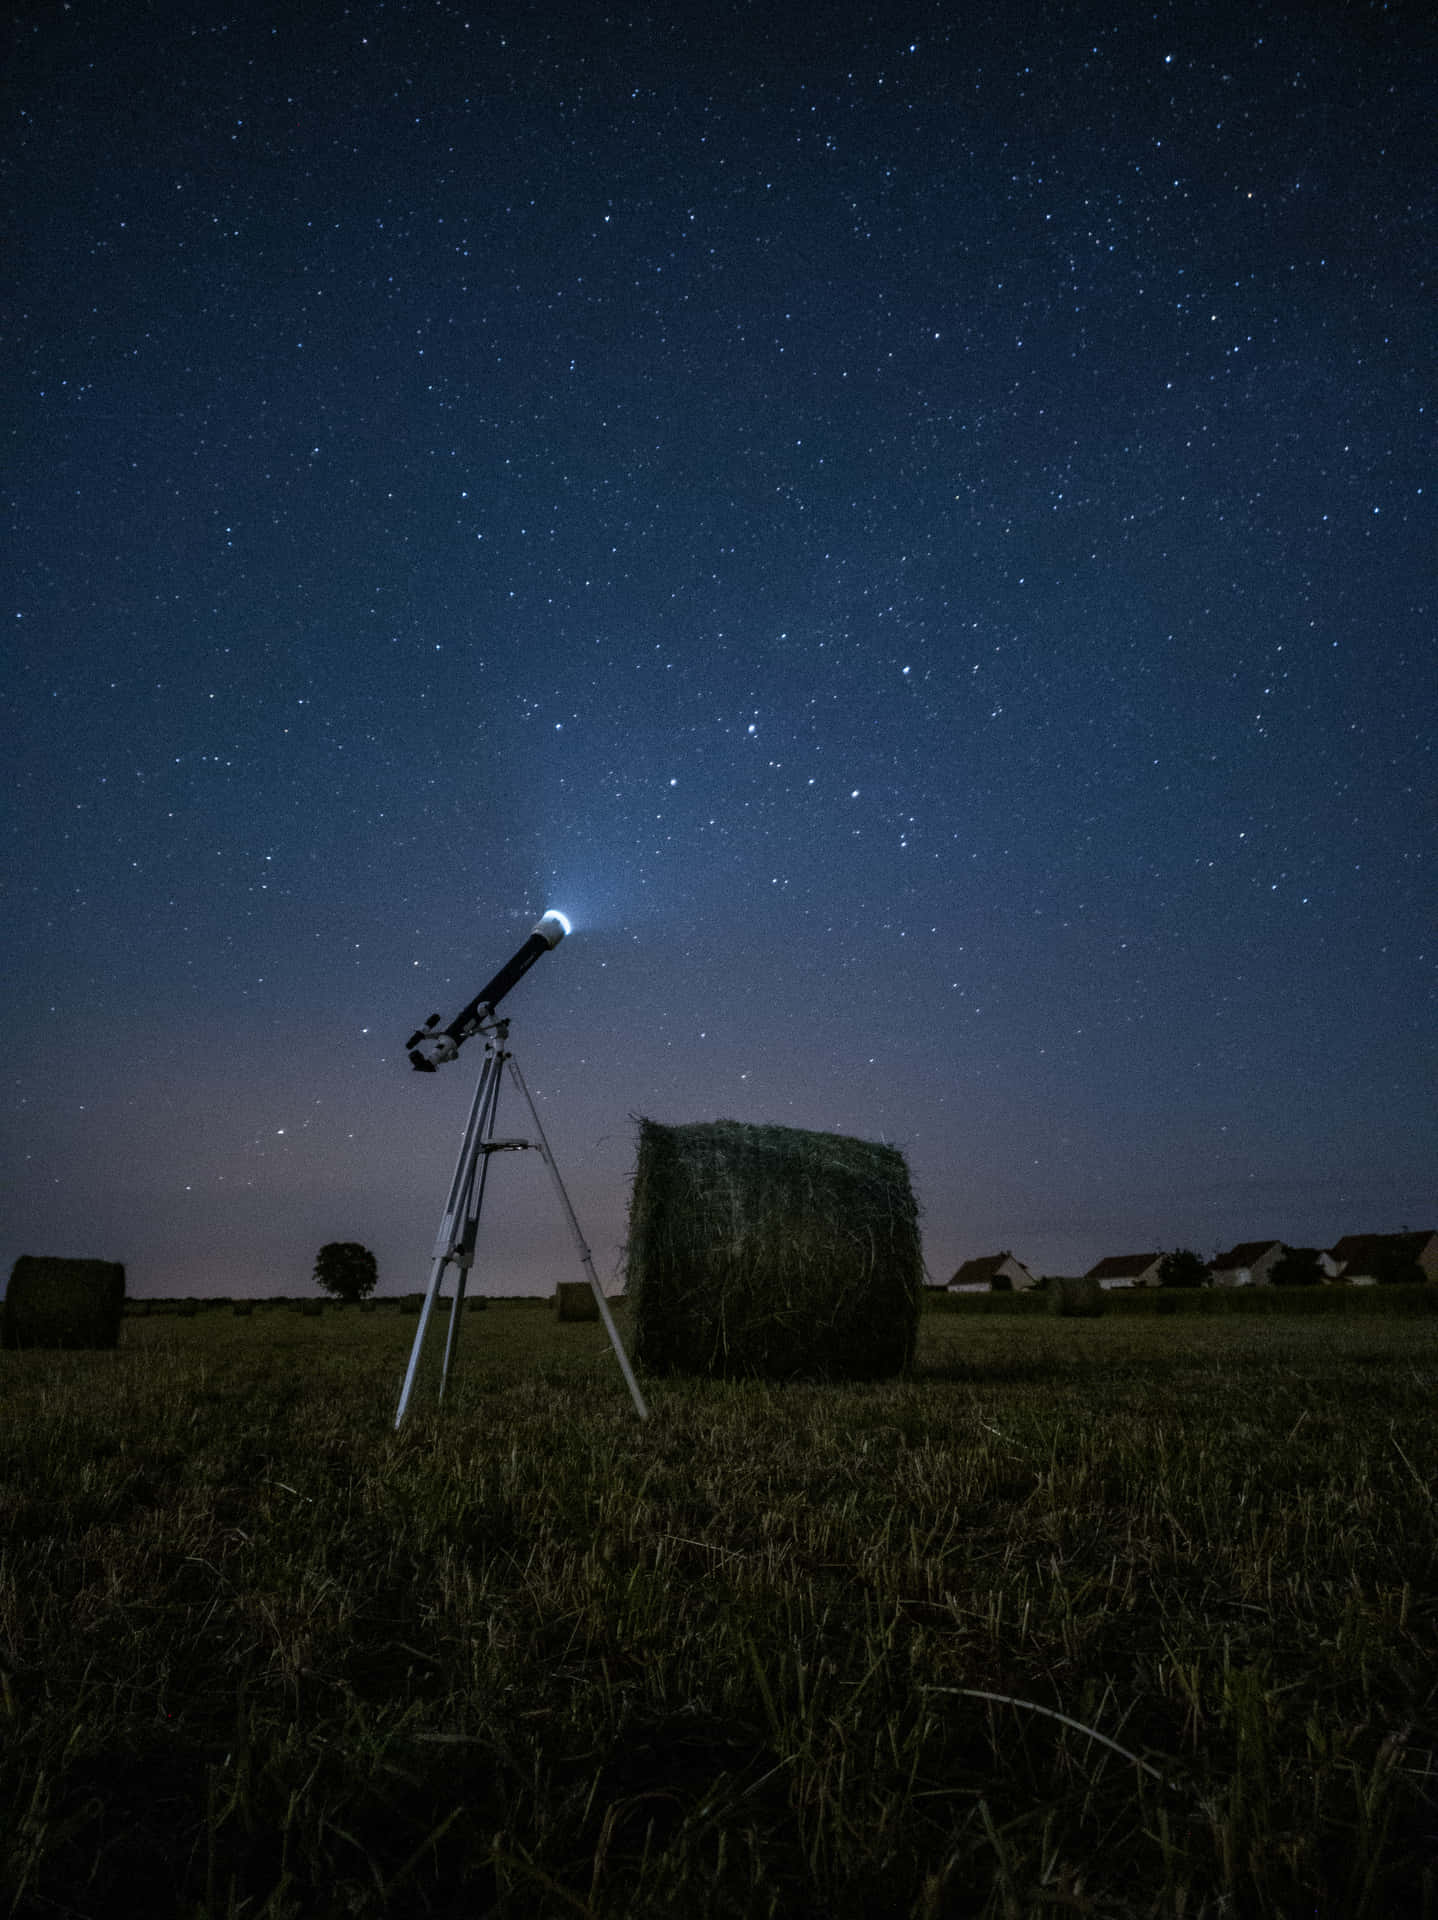 Astronomy Telescope In Field At Night Wallpaper